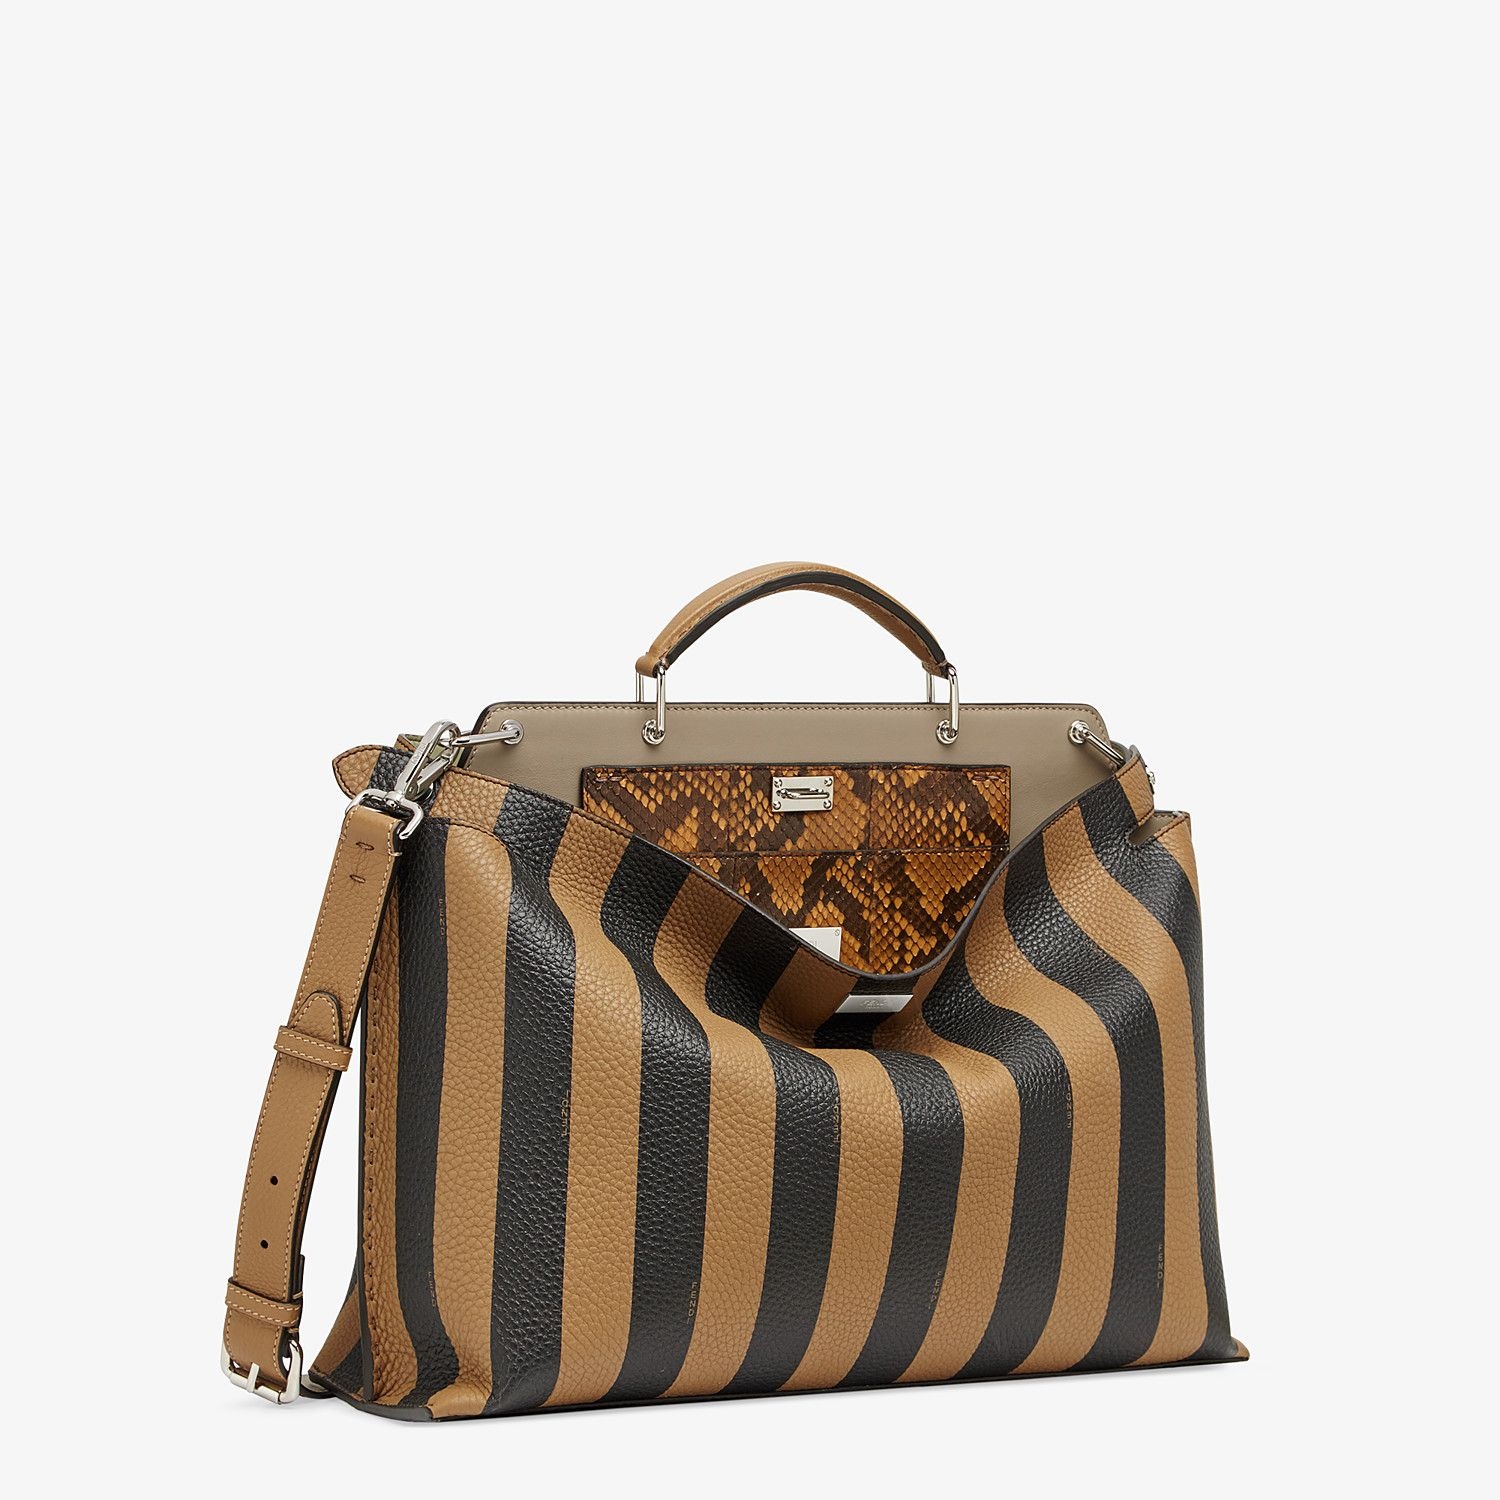  Brown leather bag - 2